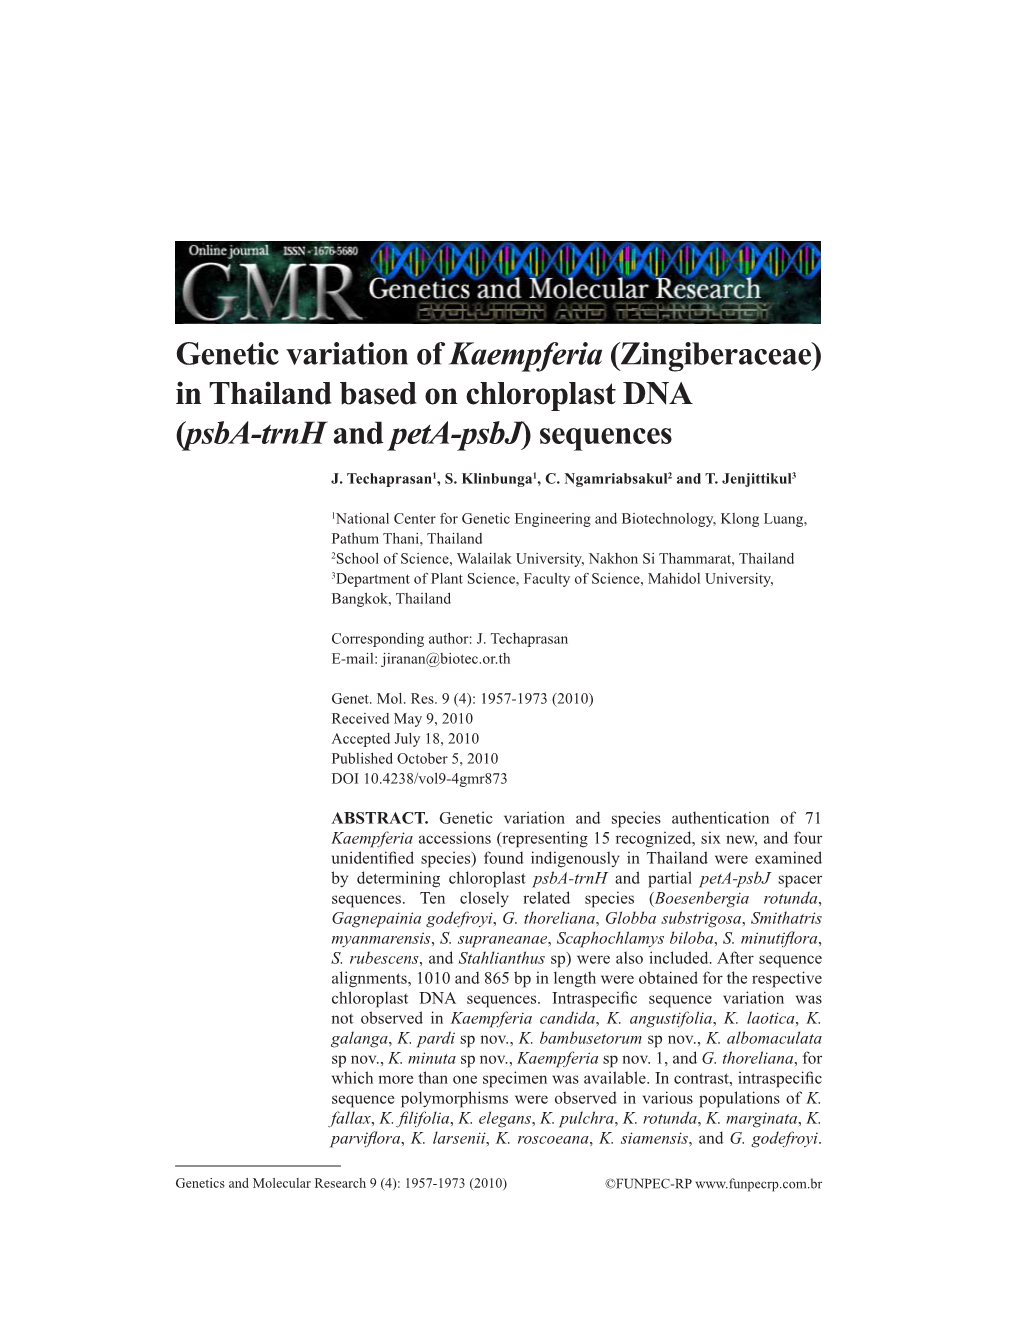 Genetic Variation of Kaempferia (Zingiberaceae) in Thailand Based on Chloroplast DNA (Psba-Trnh and Peta-Psbj) Sequences